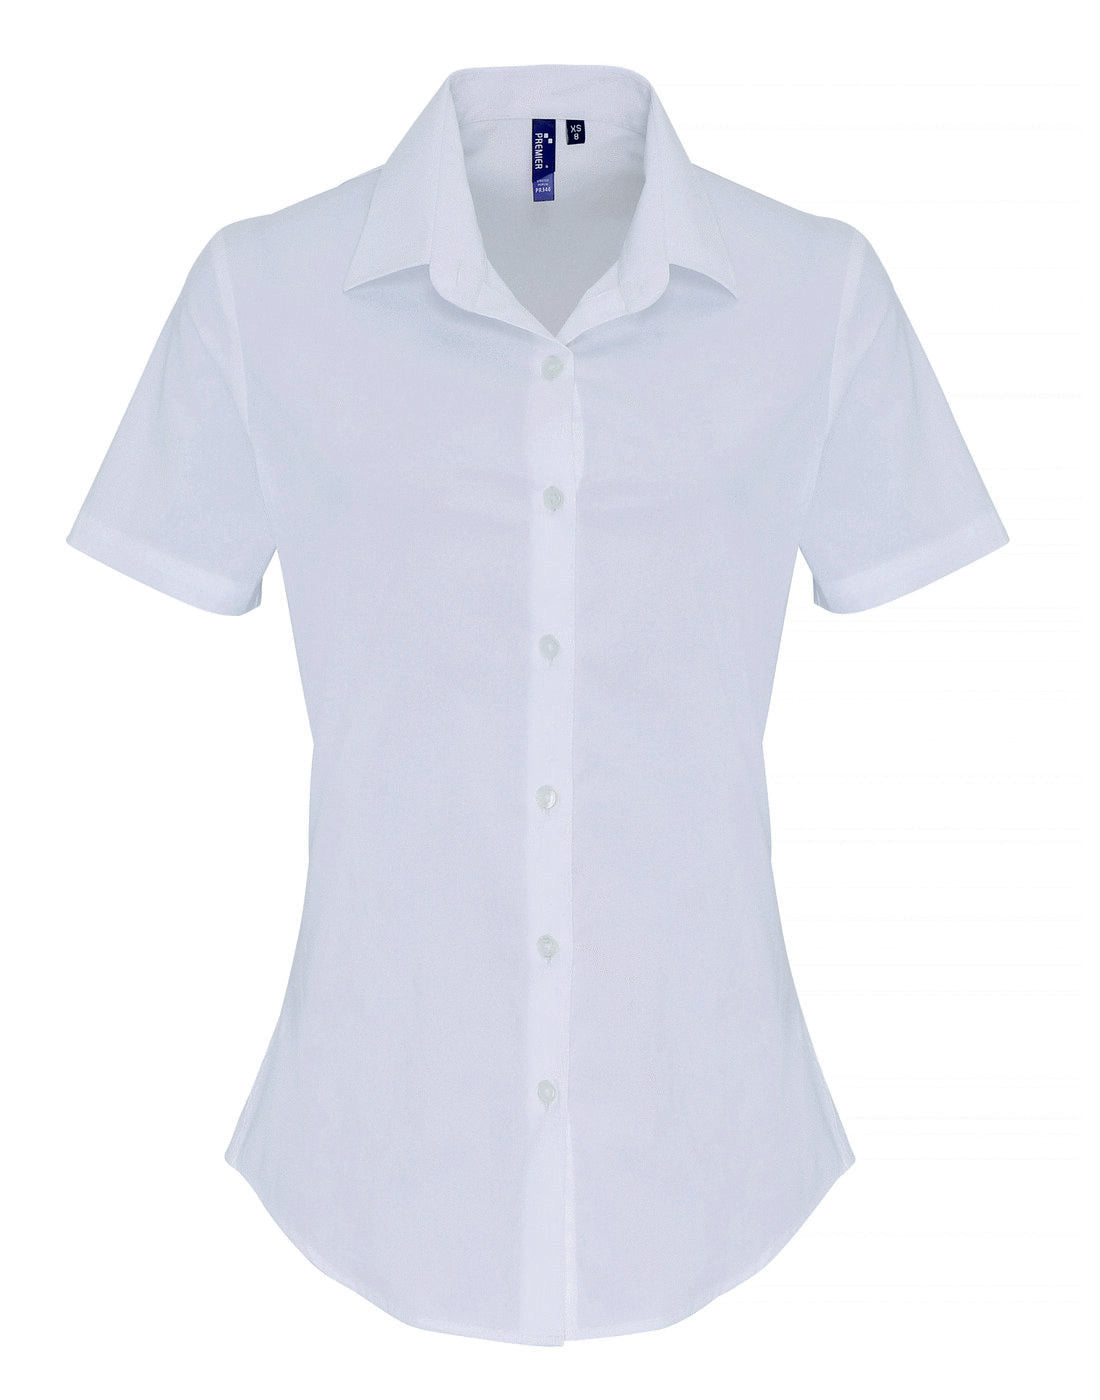 Premier Women's Stretch-Fit Cotton Poplin Short Sleeve Shirt